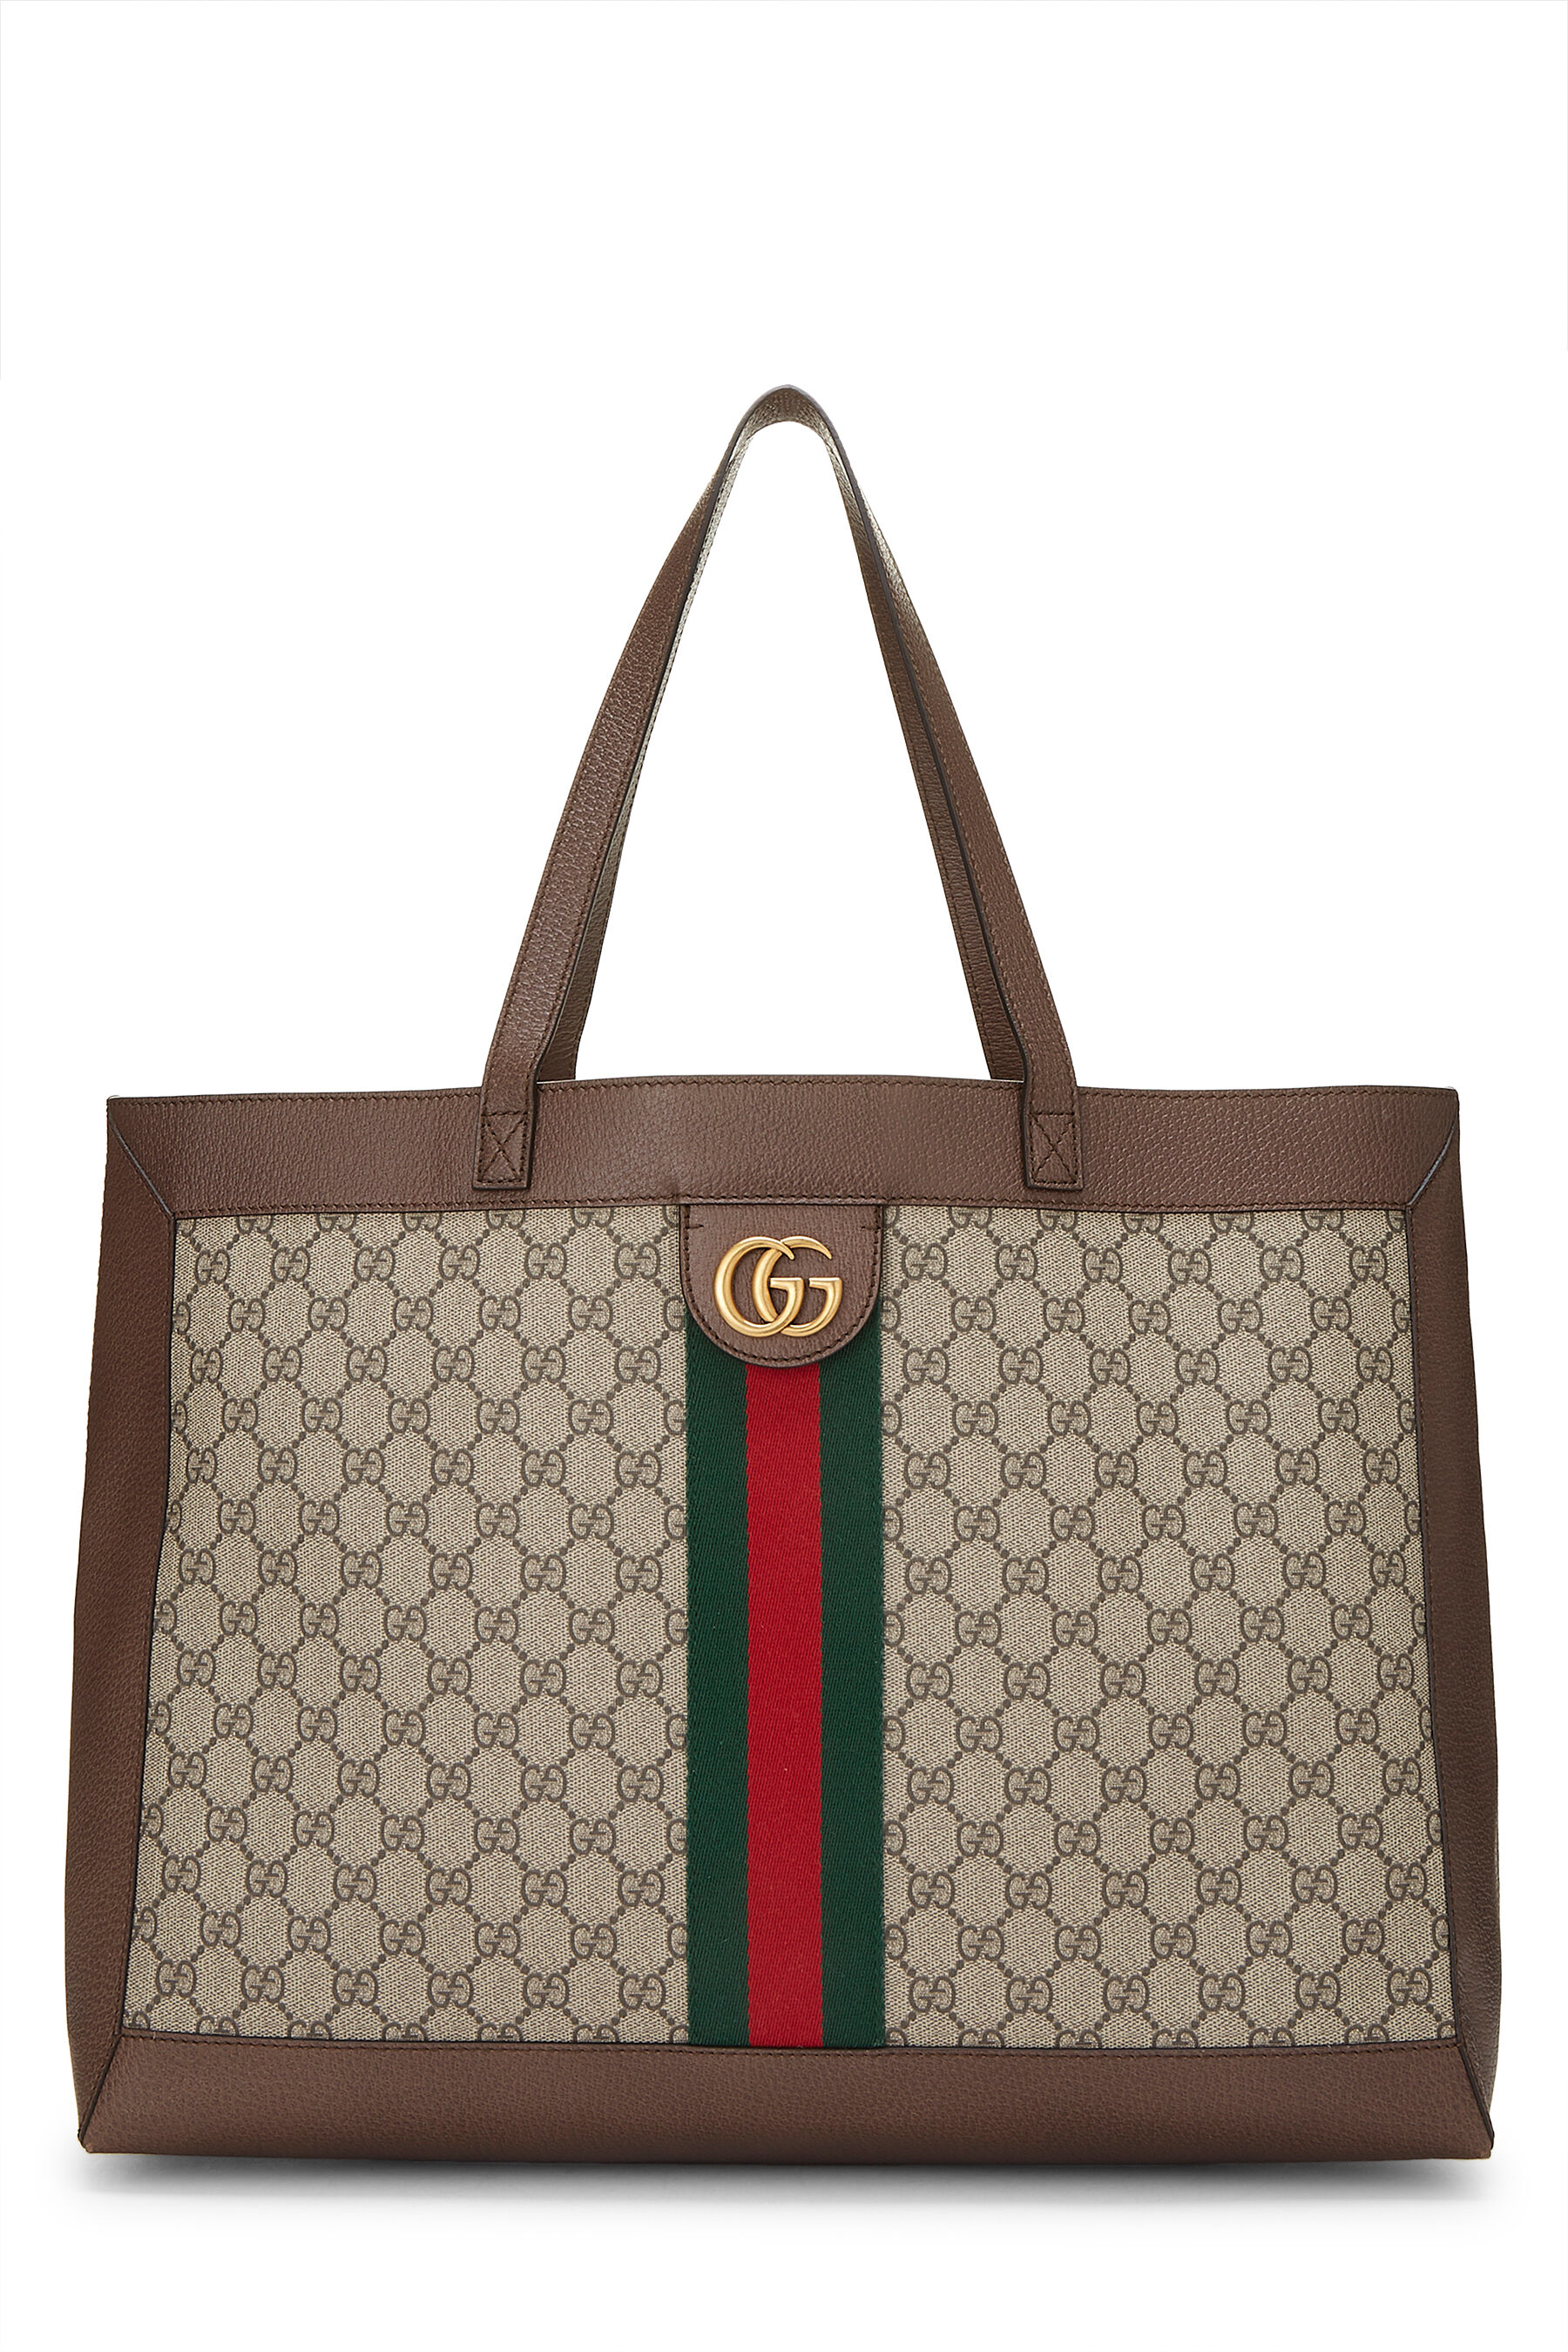 Gucci Original GG Supreme Canvas Soft Ophidia Tote Medium